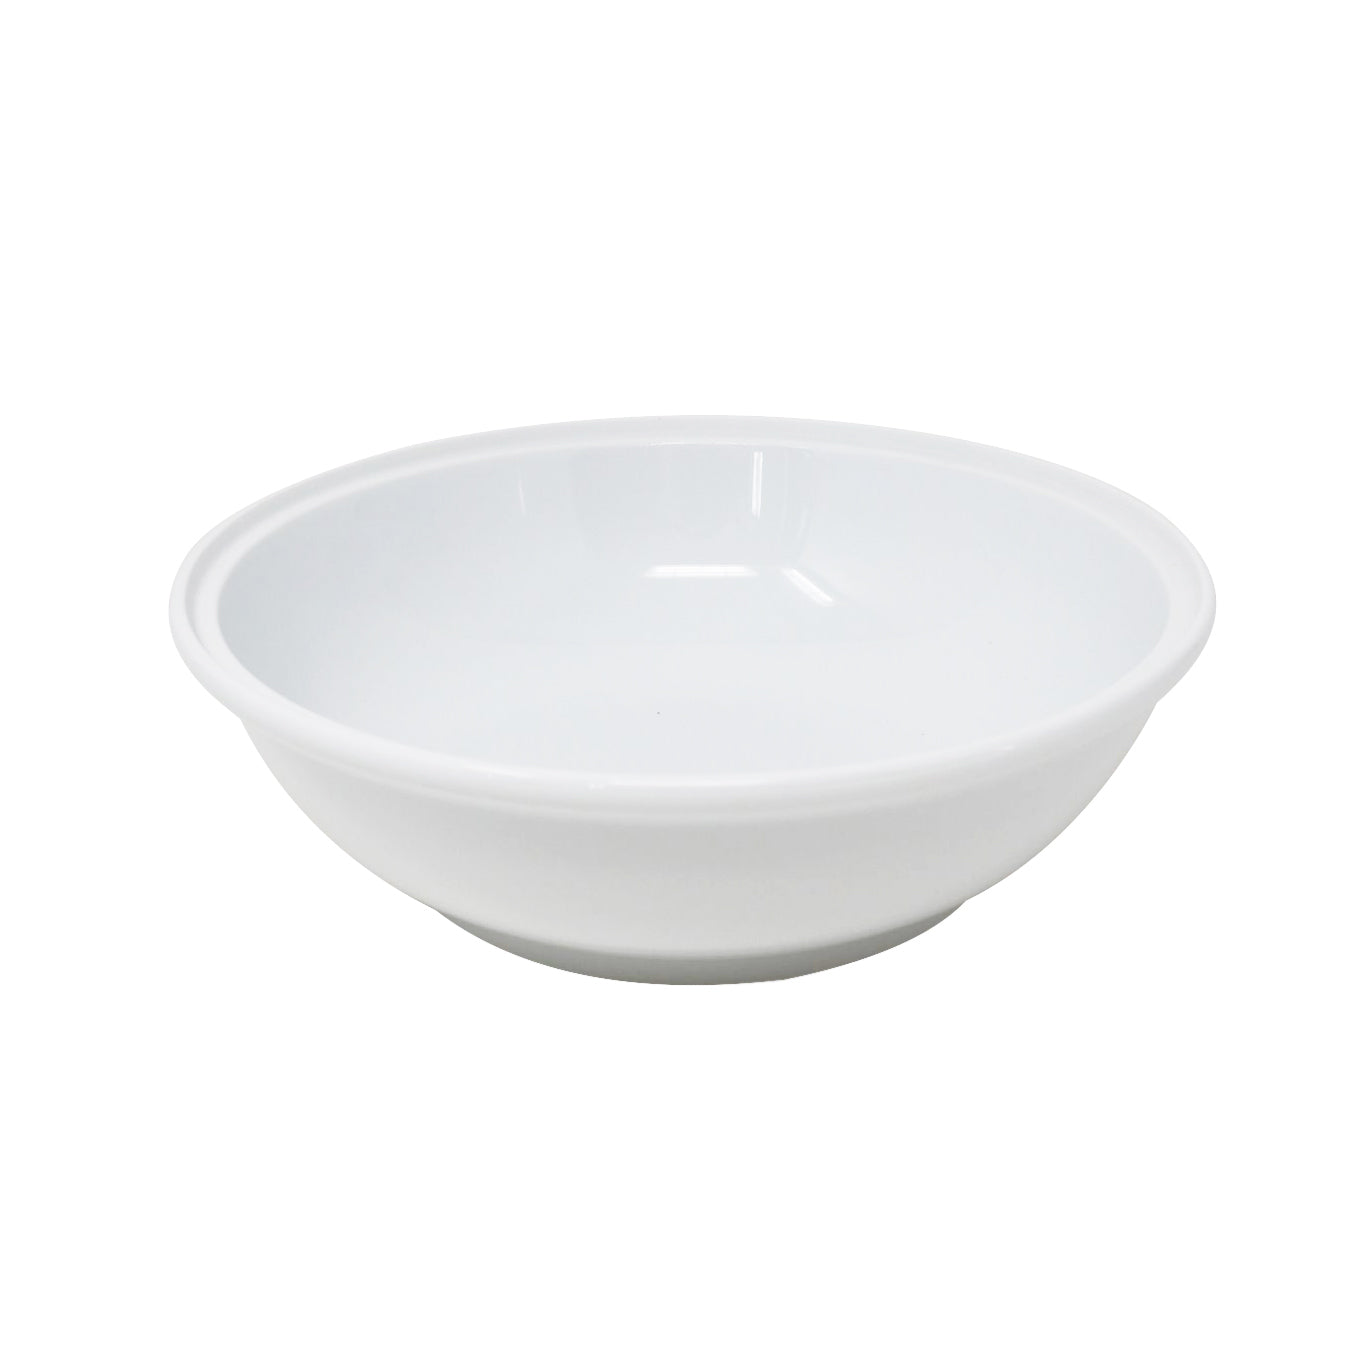 Noritake Lifestyle White Covered Serving Bowl 960ml